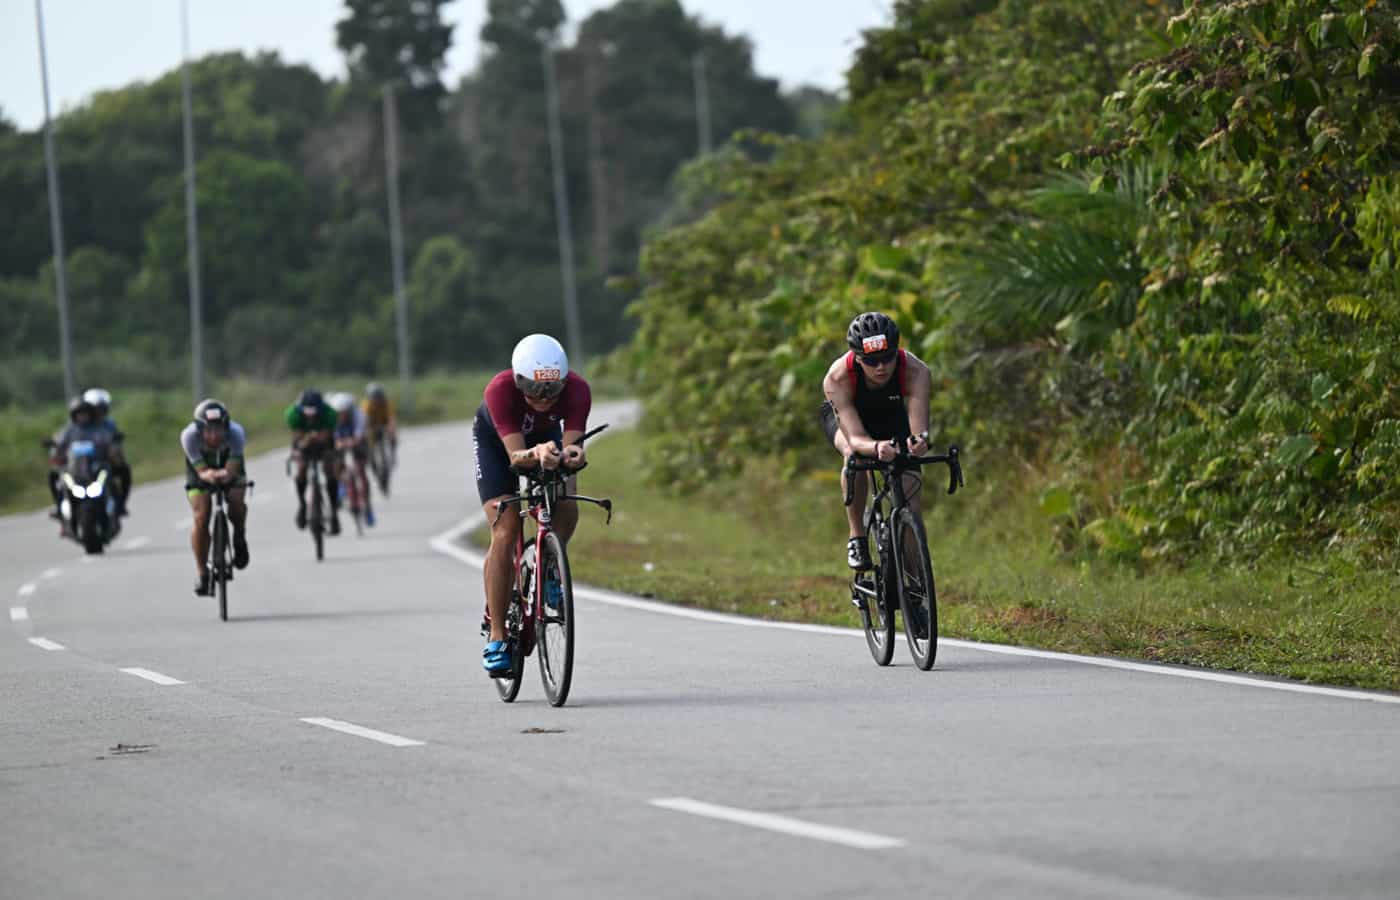 Foremost triathlon coaches in Malaysia and Singapore to Host Triathlon Clinic at Desaru Coast Ahead of IRONMAN 70.3 Desaru Coast